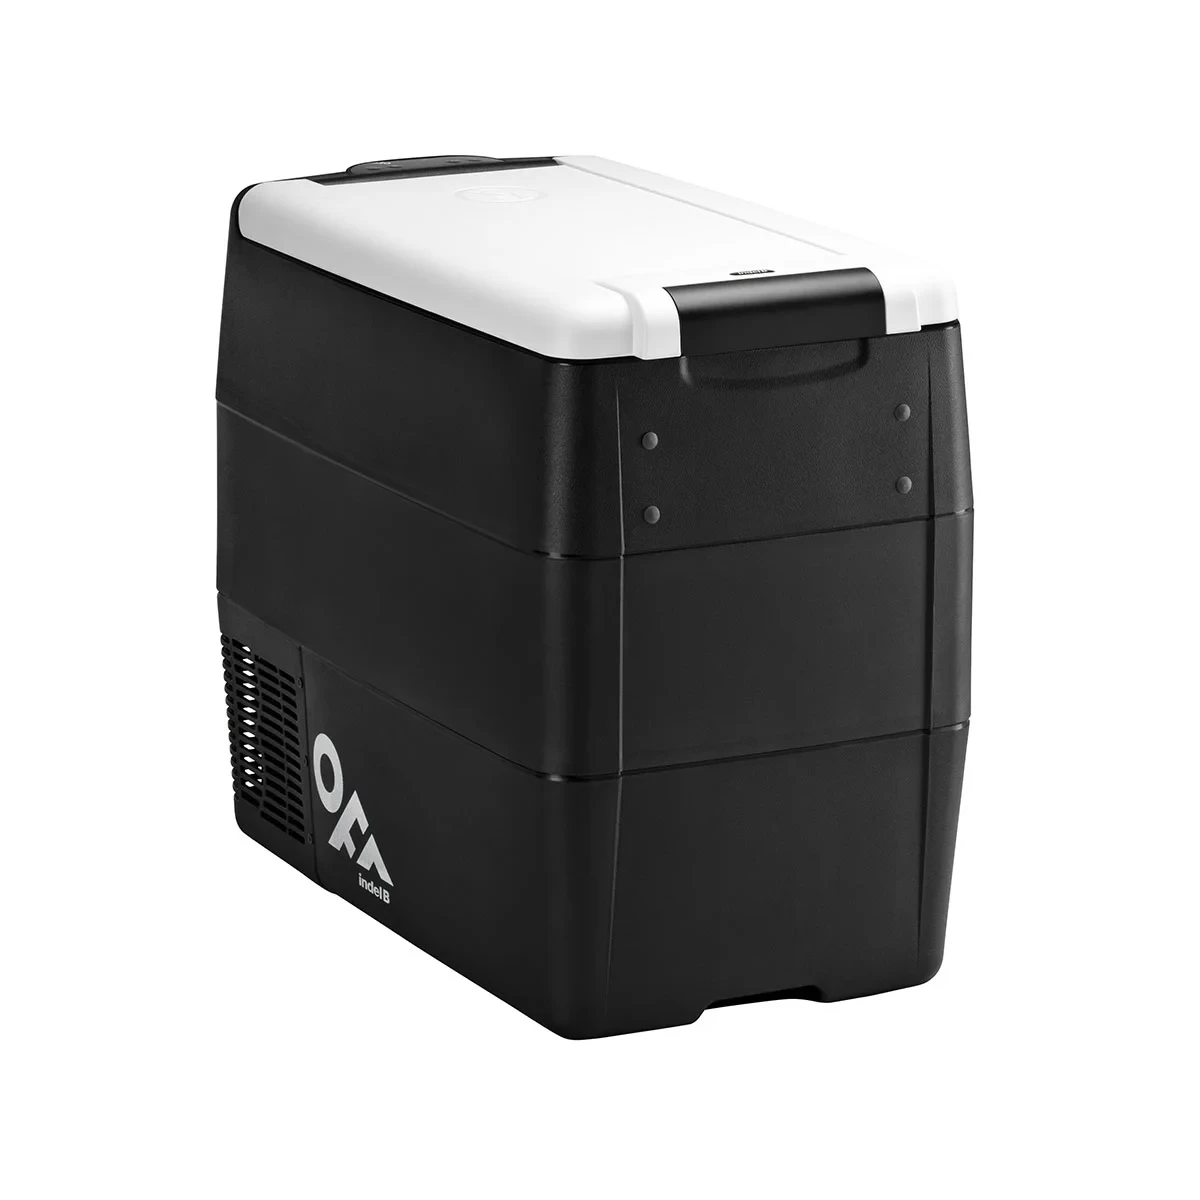 OFF by Indel B TB51 Black Travel Box Portable Refrigerator